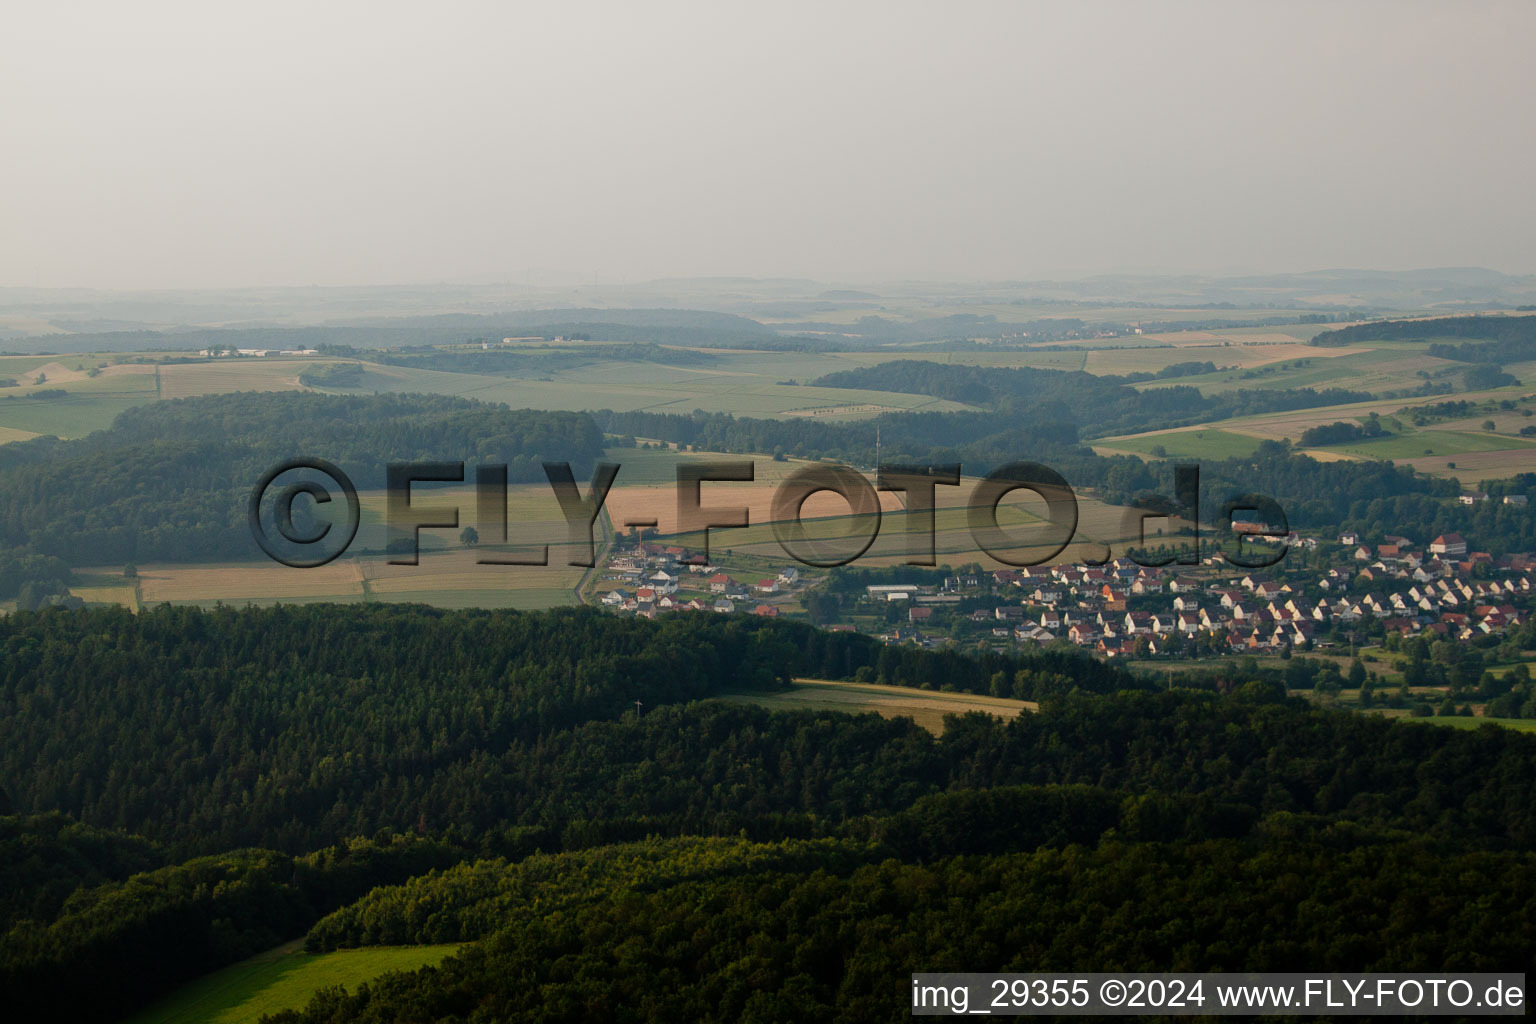 Nünschweiler in the state Rhineland-Palatinate, Germany